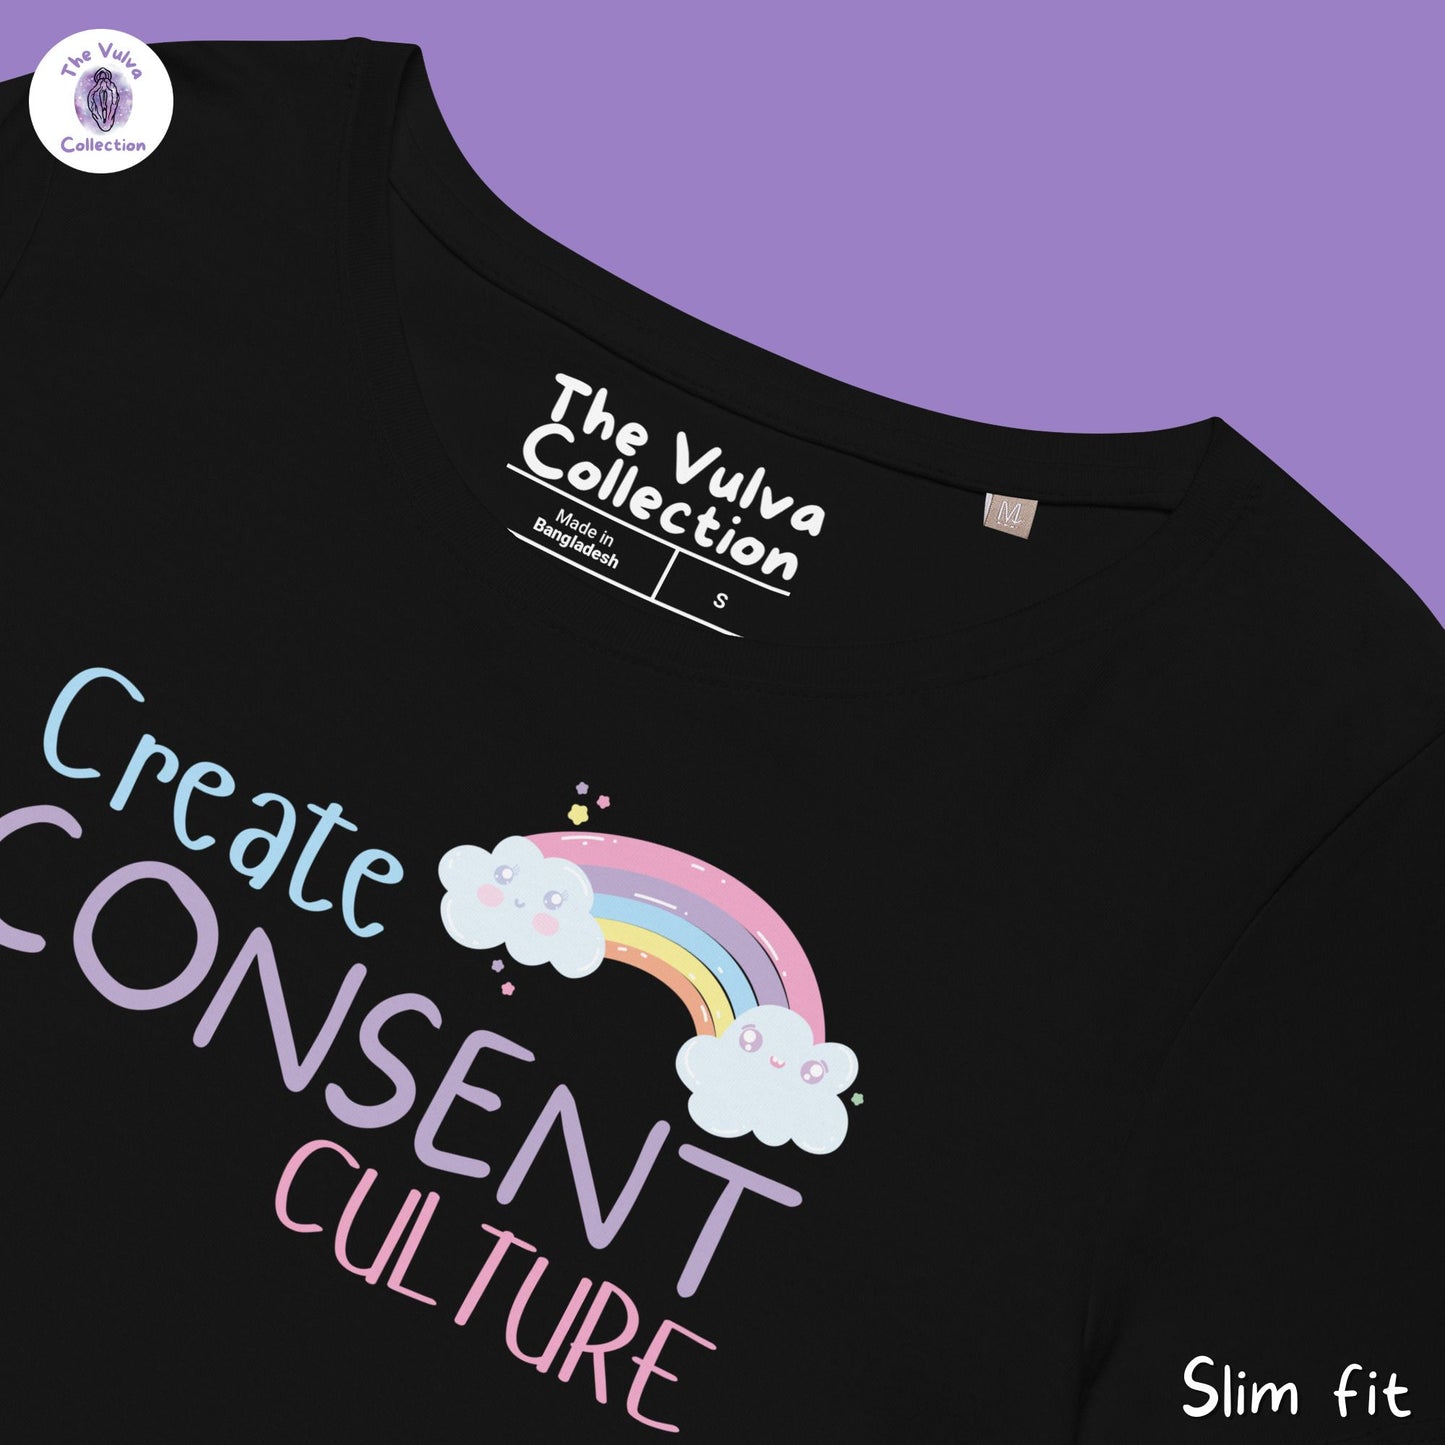 Consent Culture Rainbow Slim Fit Organic Round Collar T-Shirt